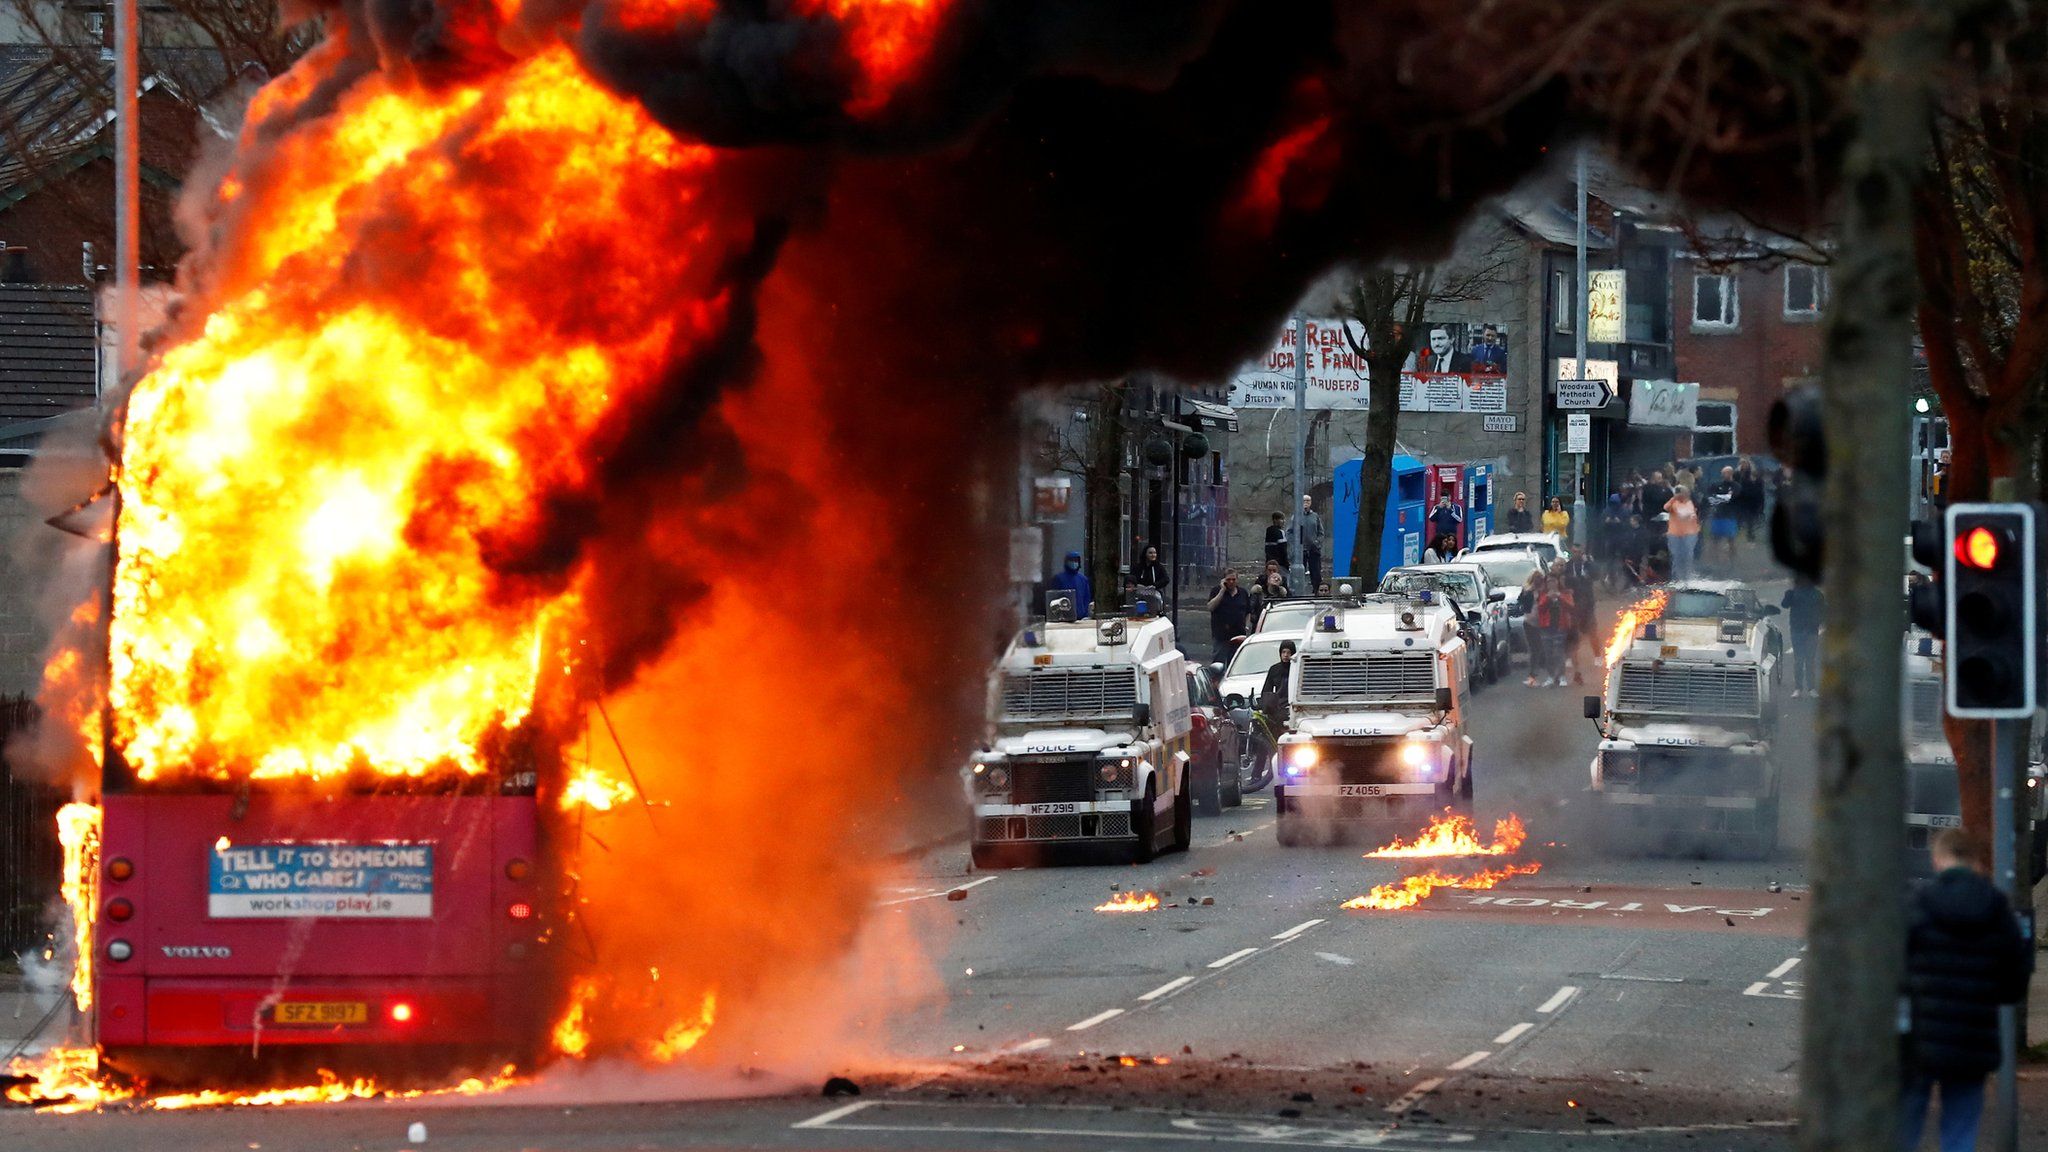 A bus burns in Belfast following rioting